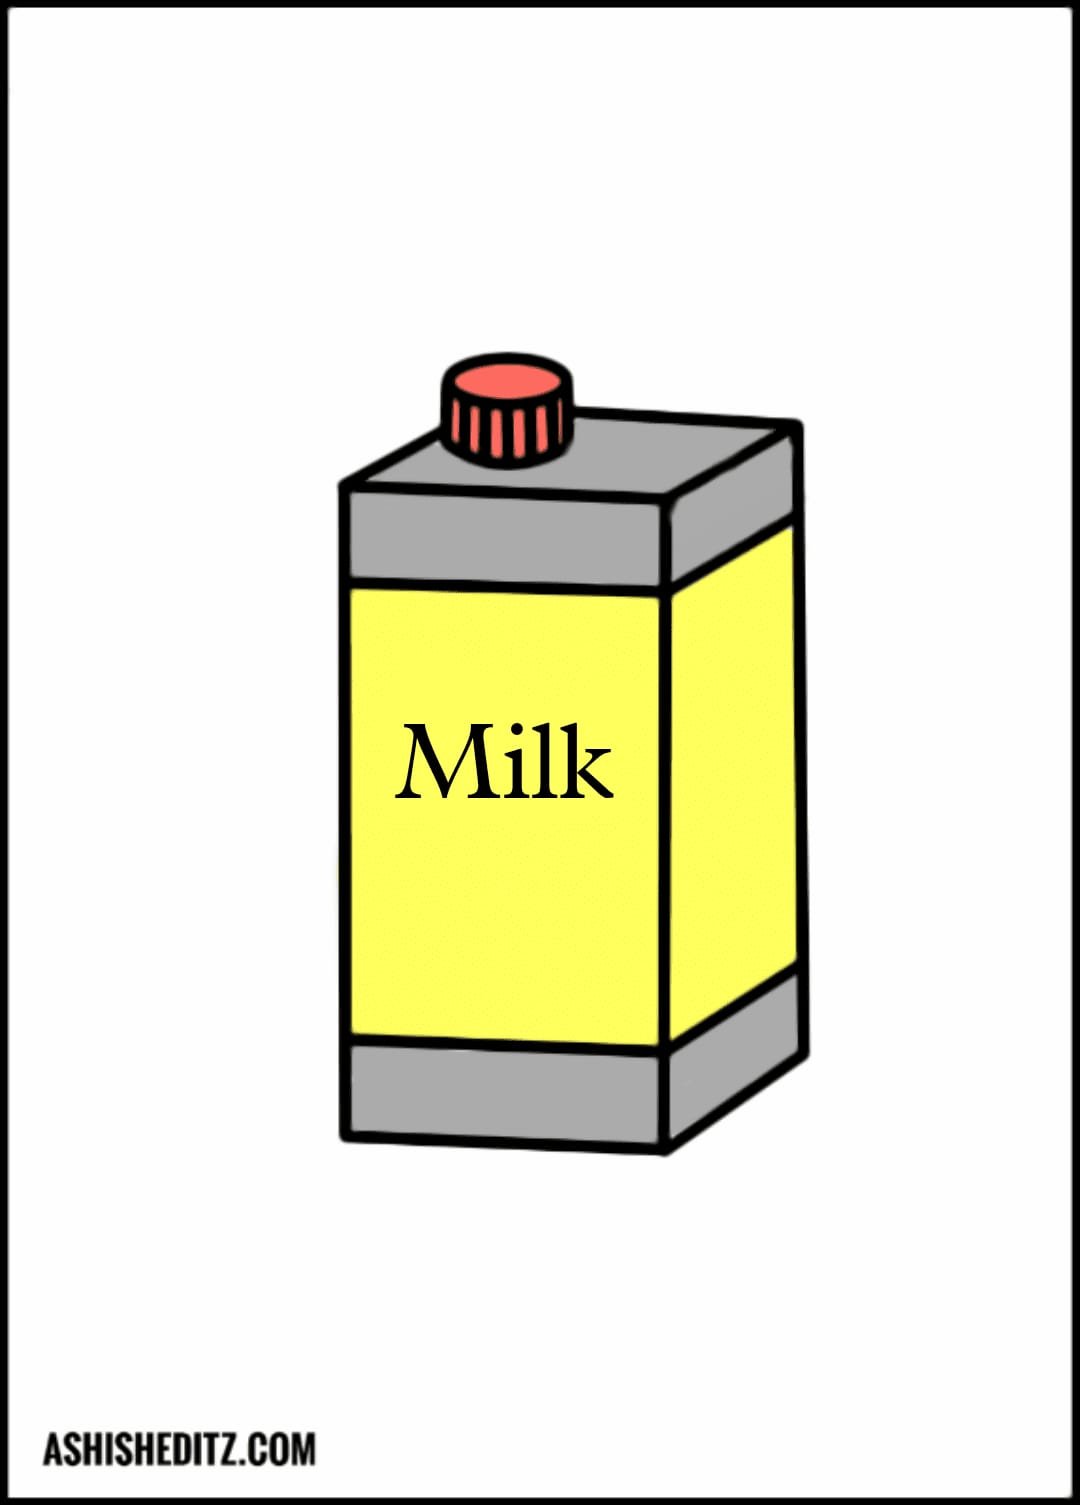 Milk Carton Sketch Images – Browse 6,612 Stock Photos, Vectors, and Video |  Adobe Stock